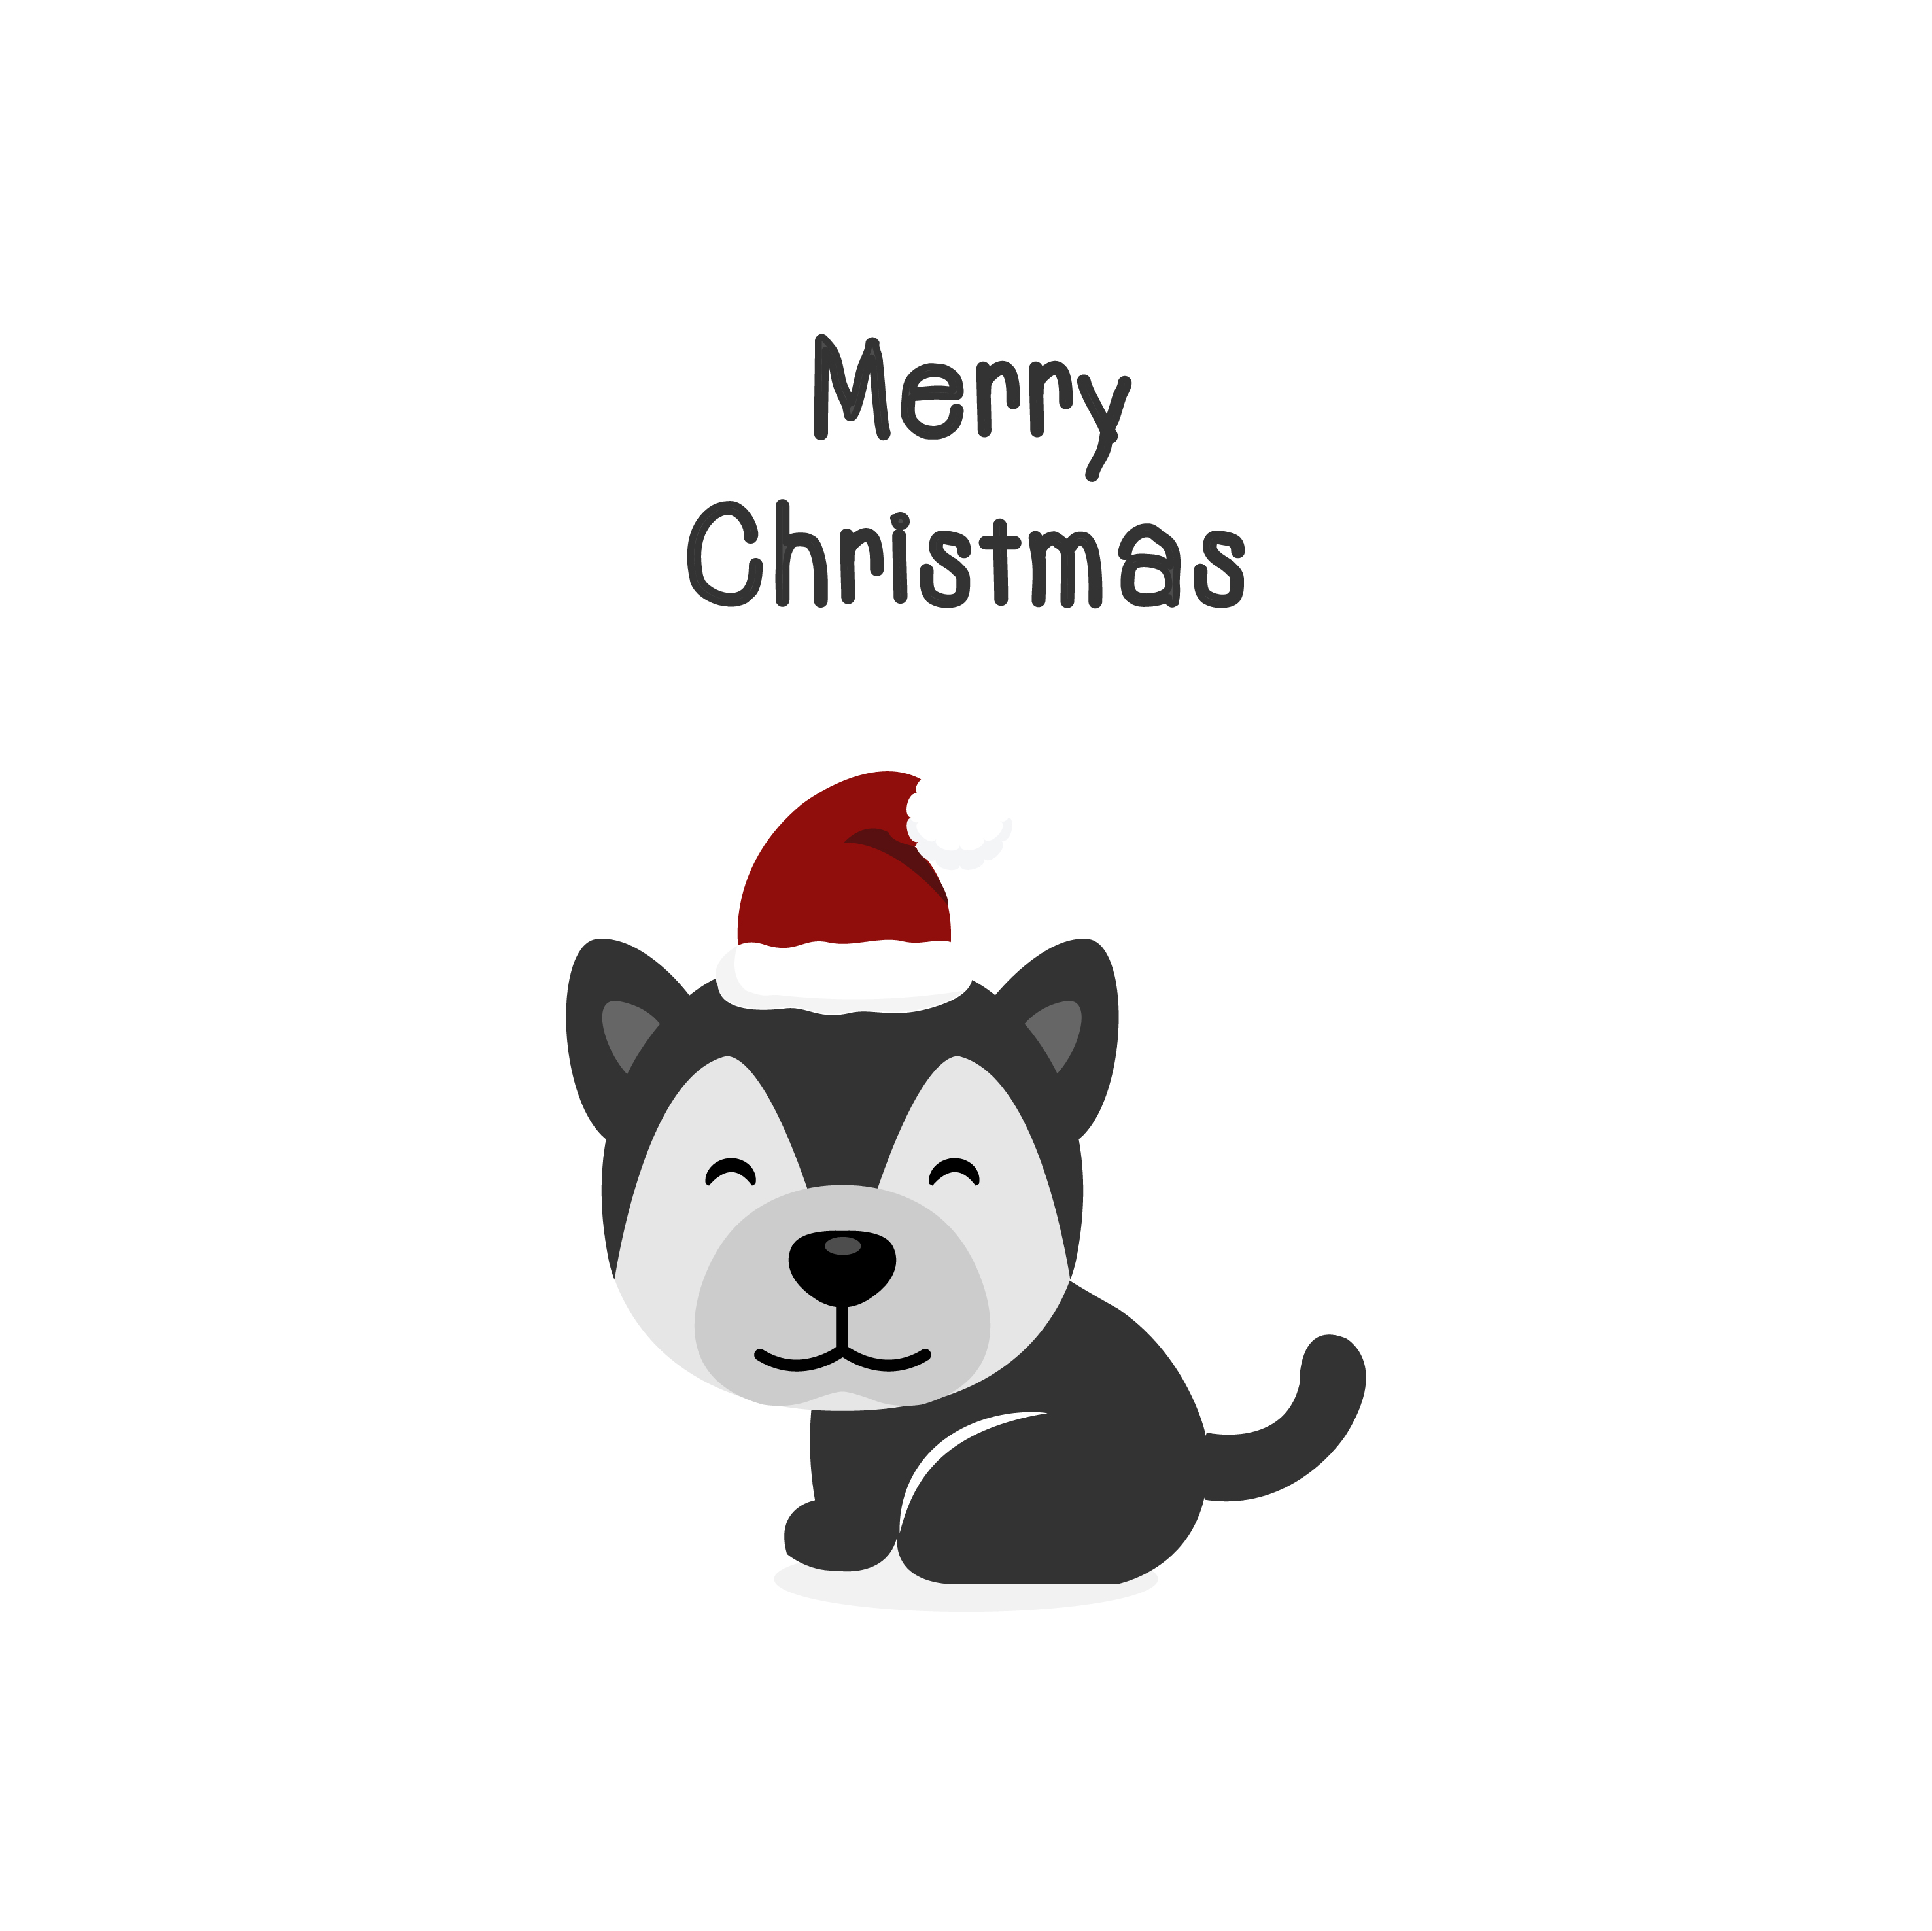 Merry Christmas Dog Cartoon Dog Vector Illustration 618705 Download Free Vectors Clipart Graphics Vector Art